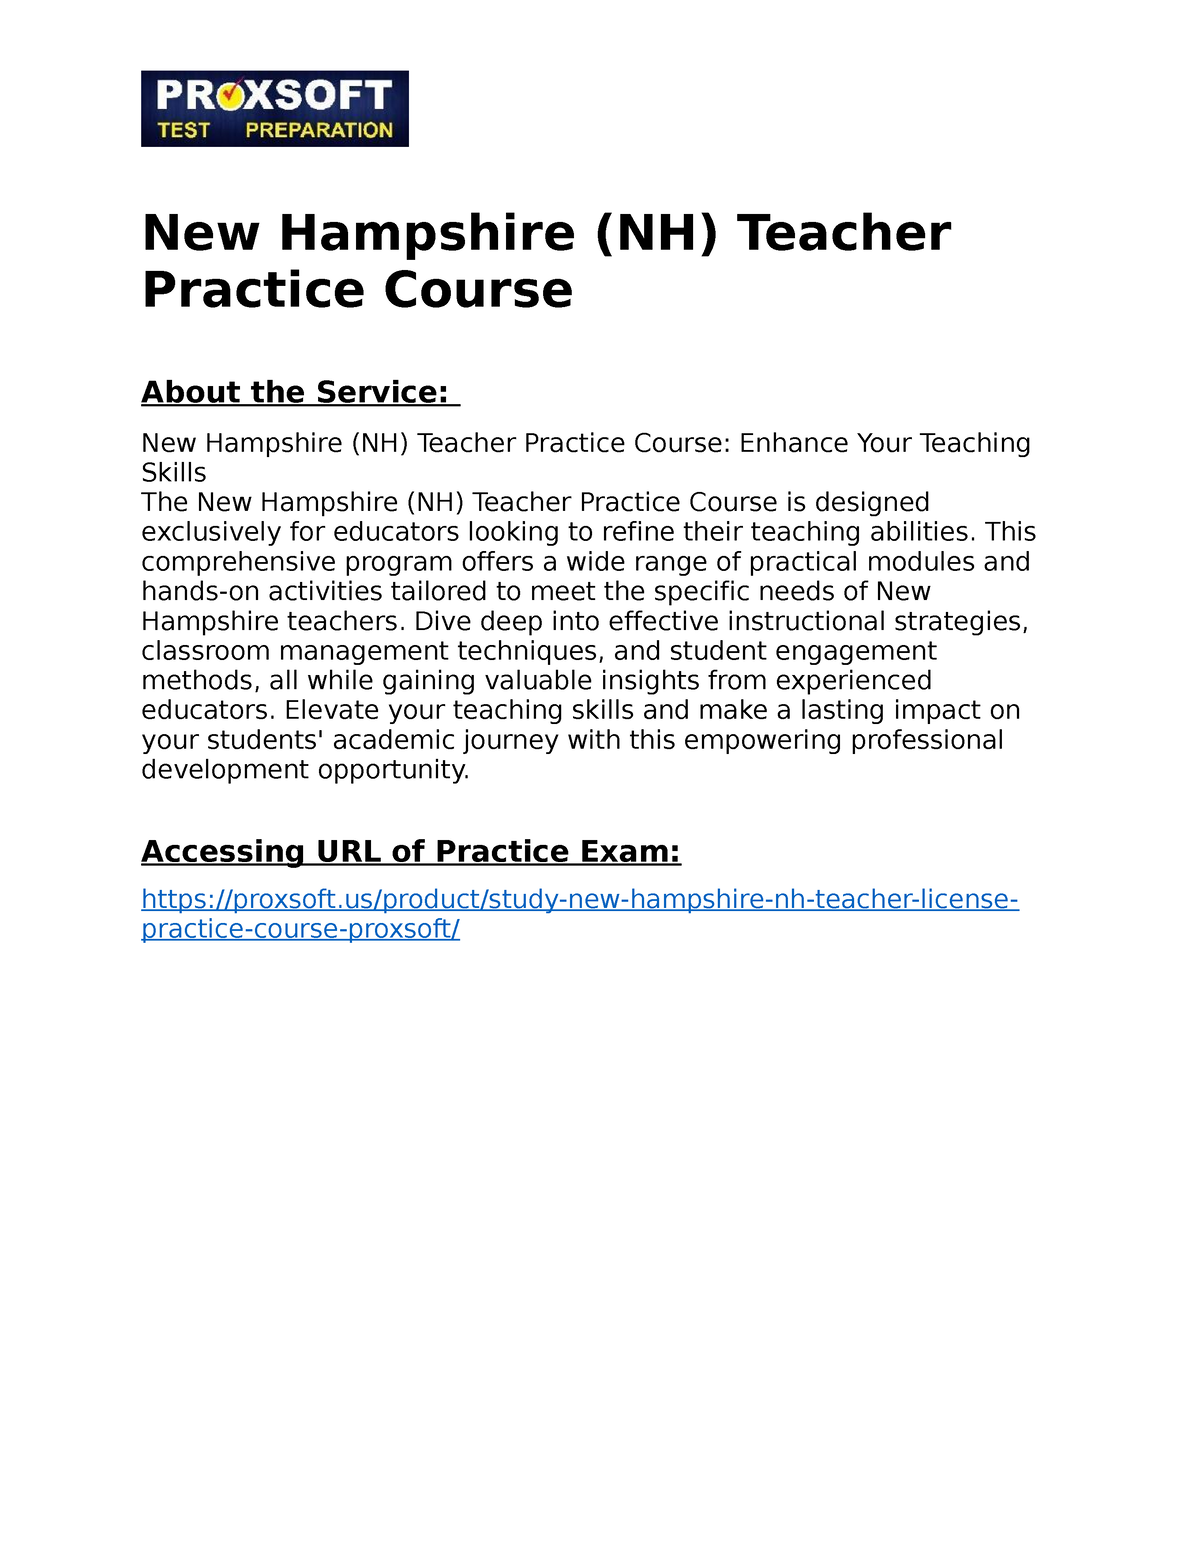 New Hampshire (NH) Teacher Practice Course This comprehensive program